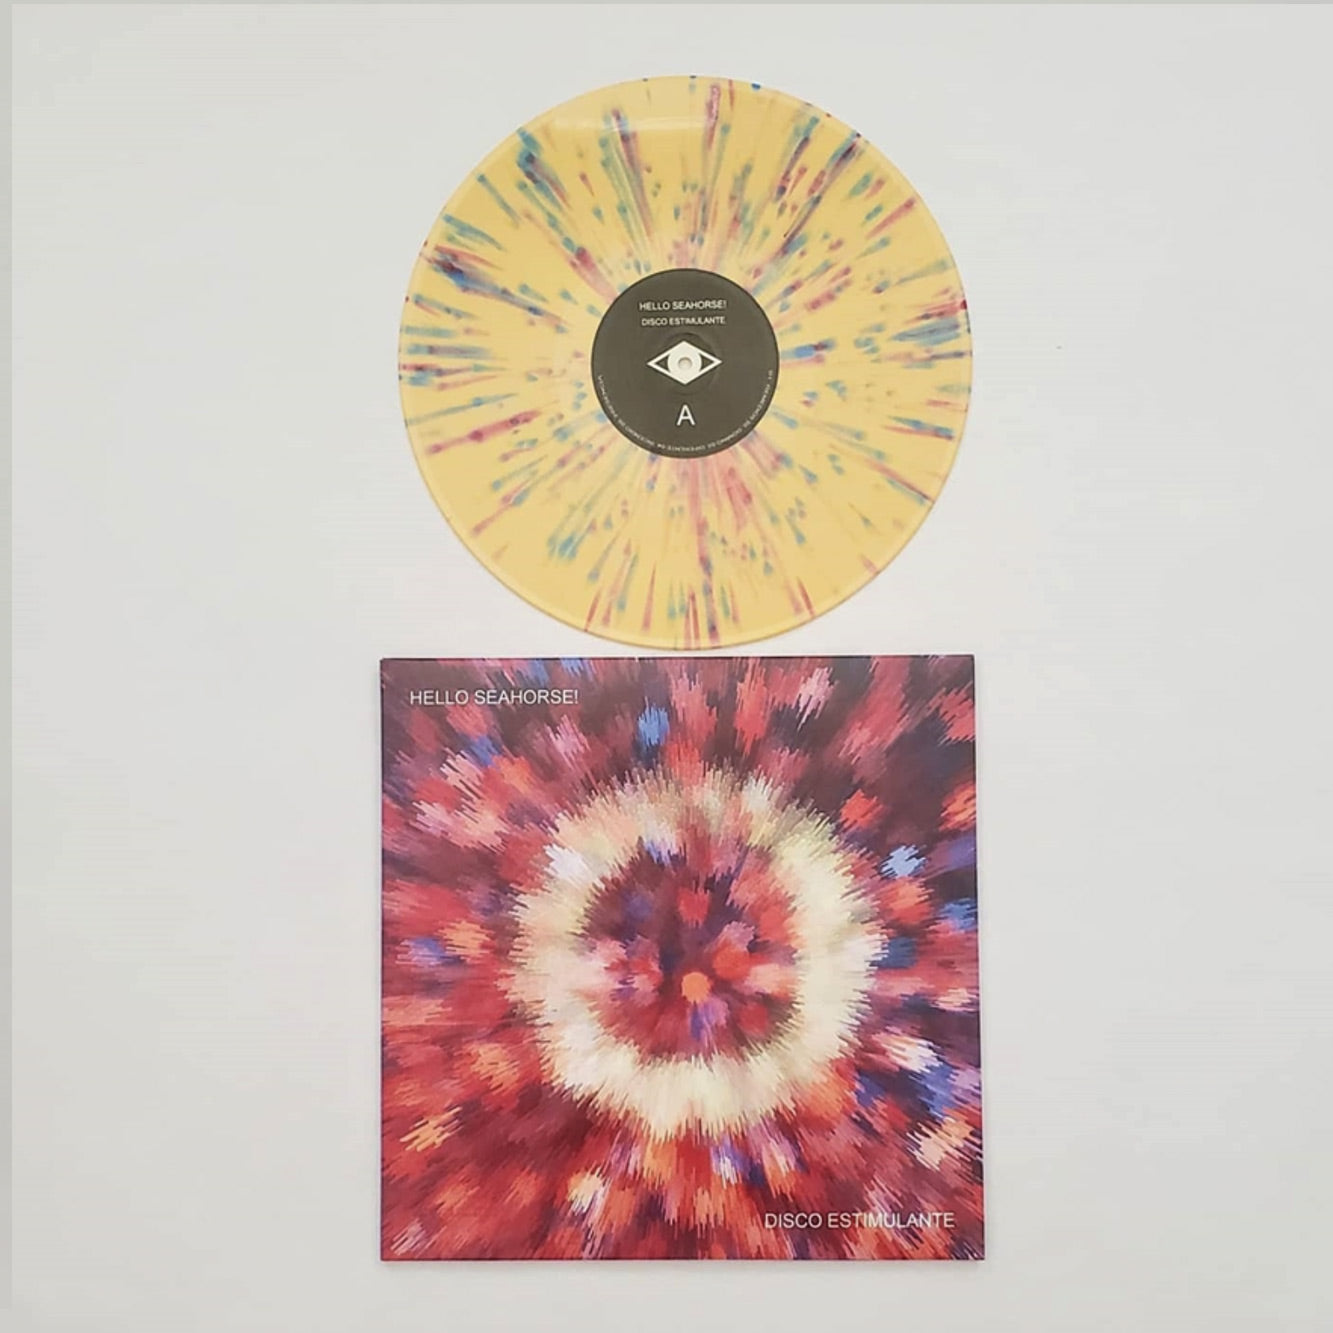 Hello Seahorse! - Disco Estimulante (Yellow w/ splattered Vinyl) Imported!!! - Limited Edition!!!